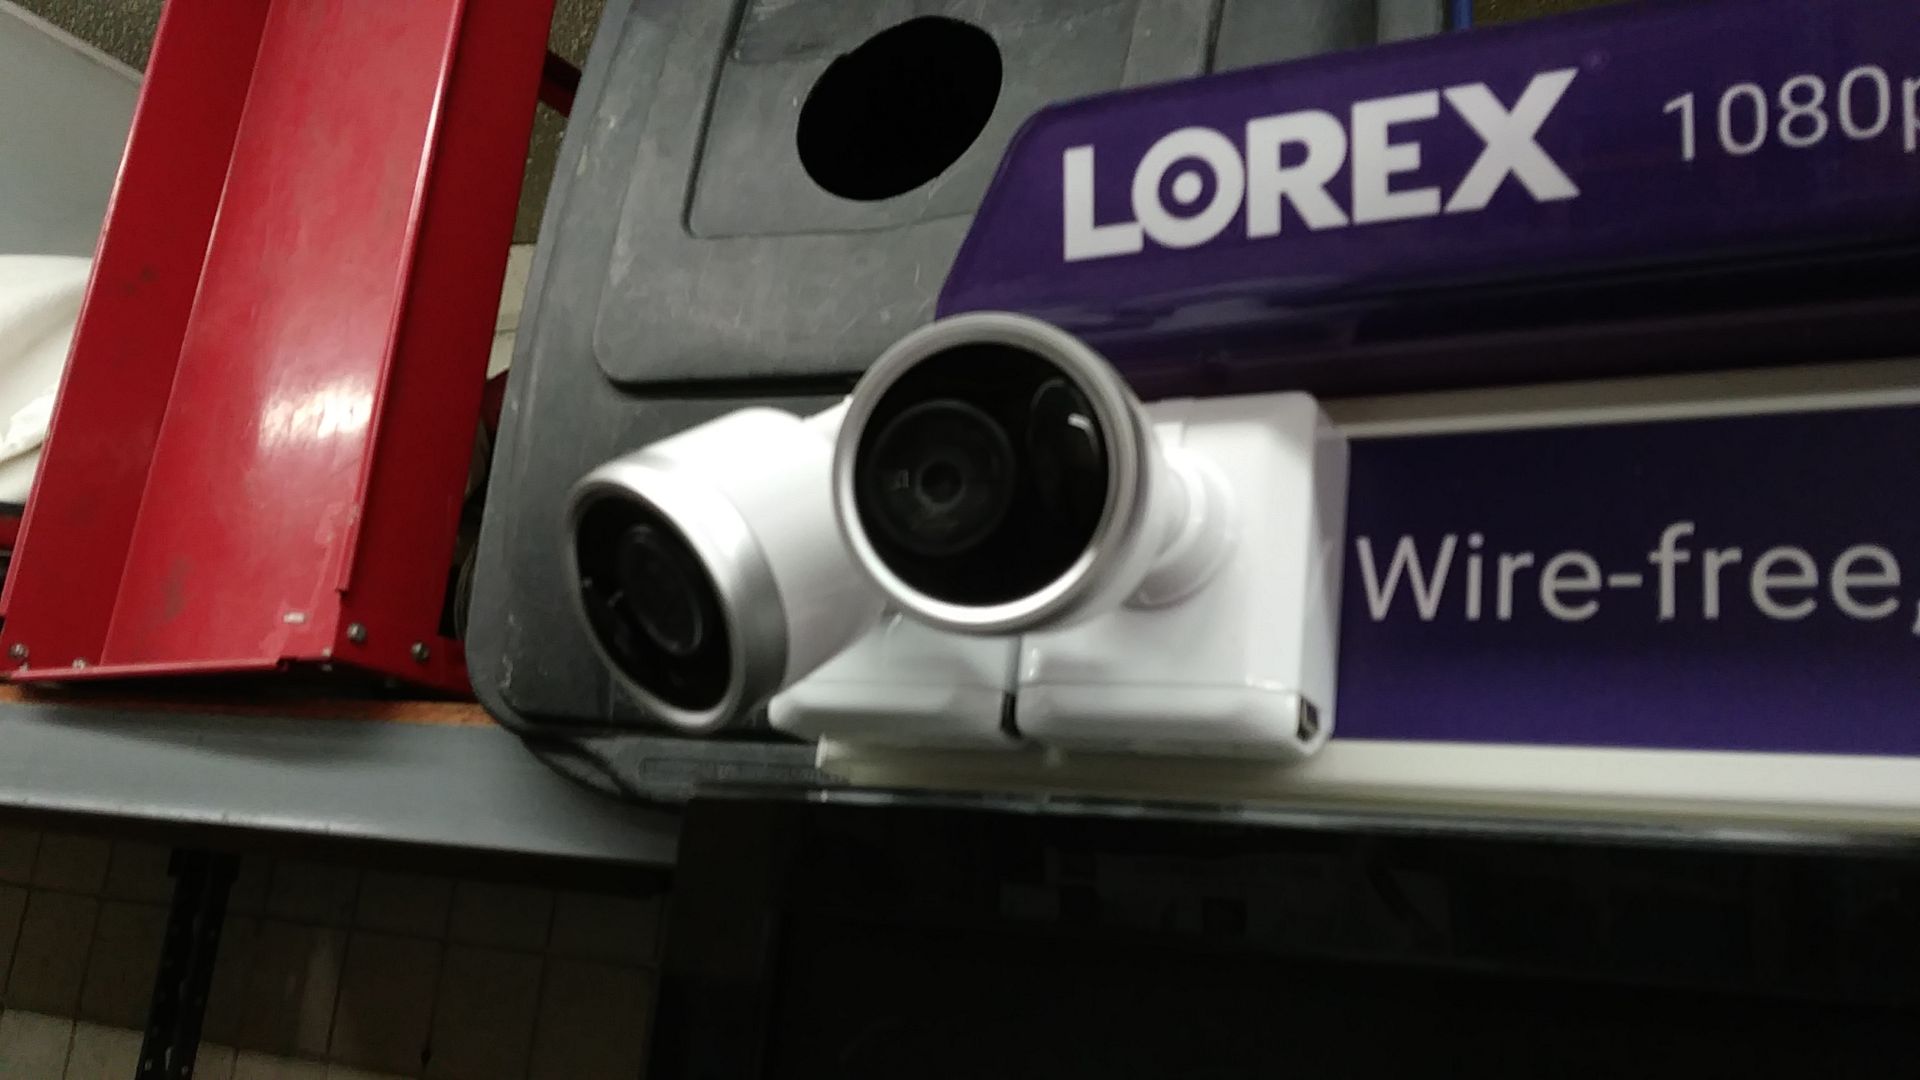 LOREX 1080P HD WIFI SECURITY CAMERA SYSTEM - Image 3 of 7